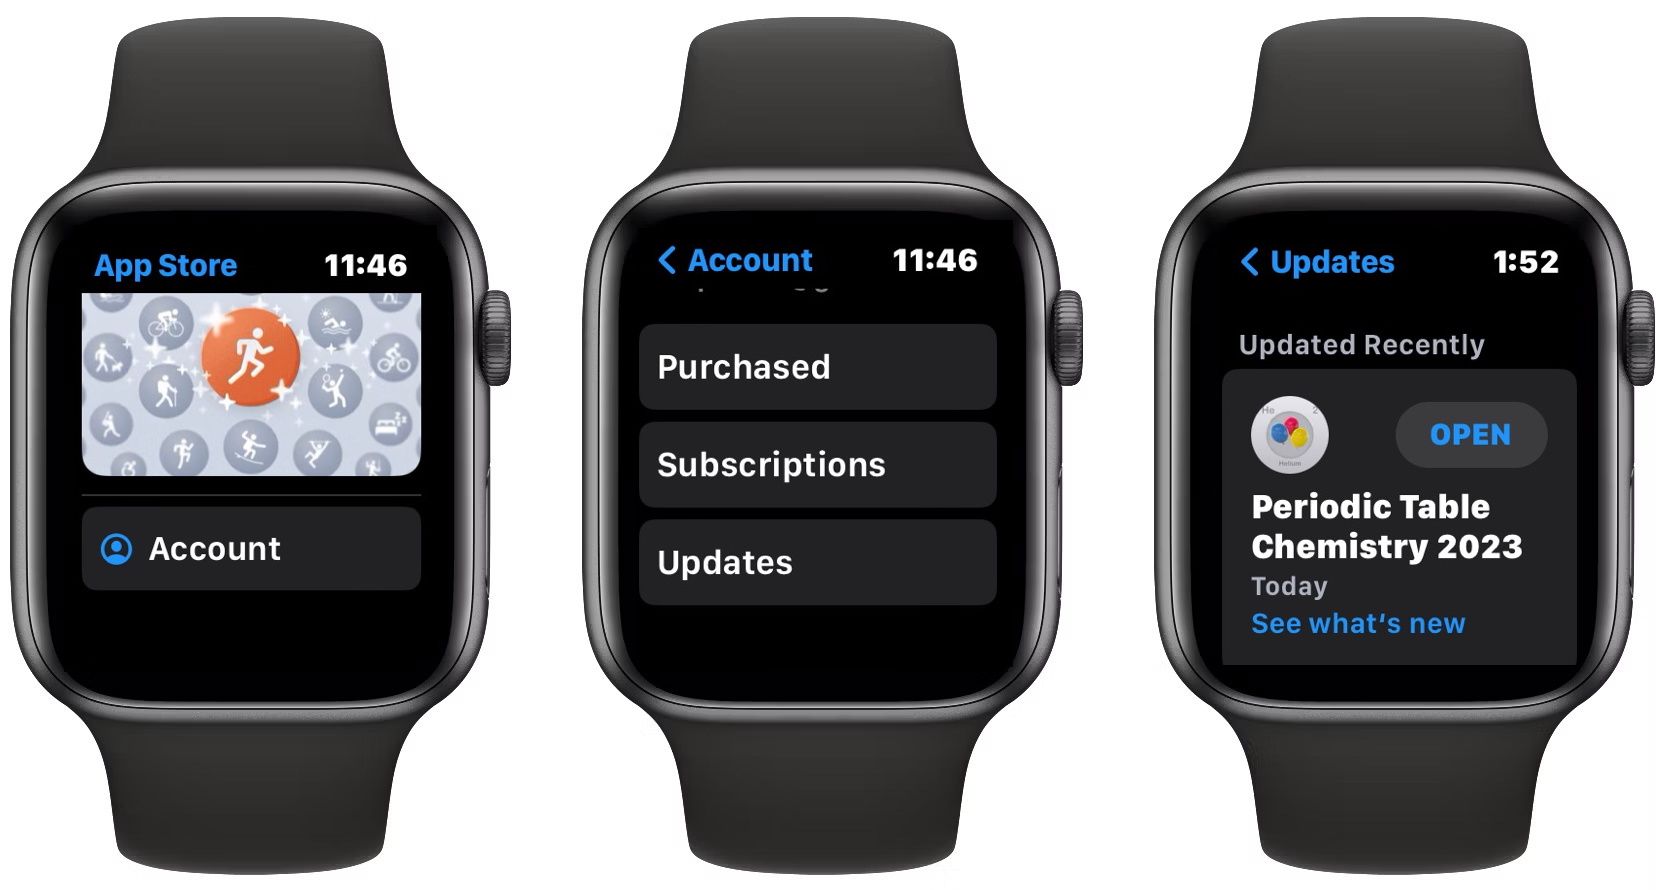 Apple Watch Update apps manually